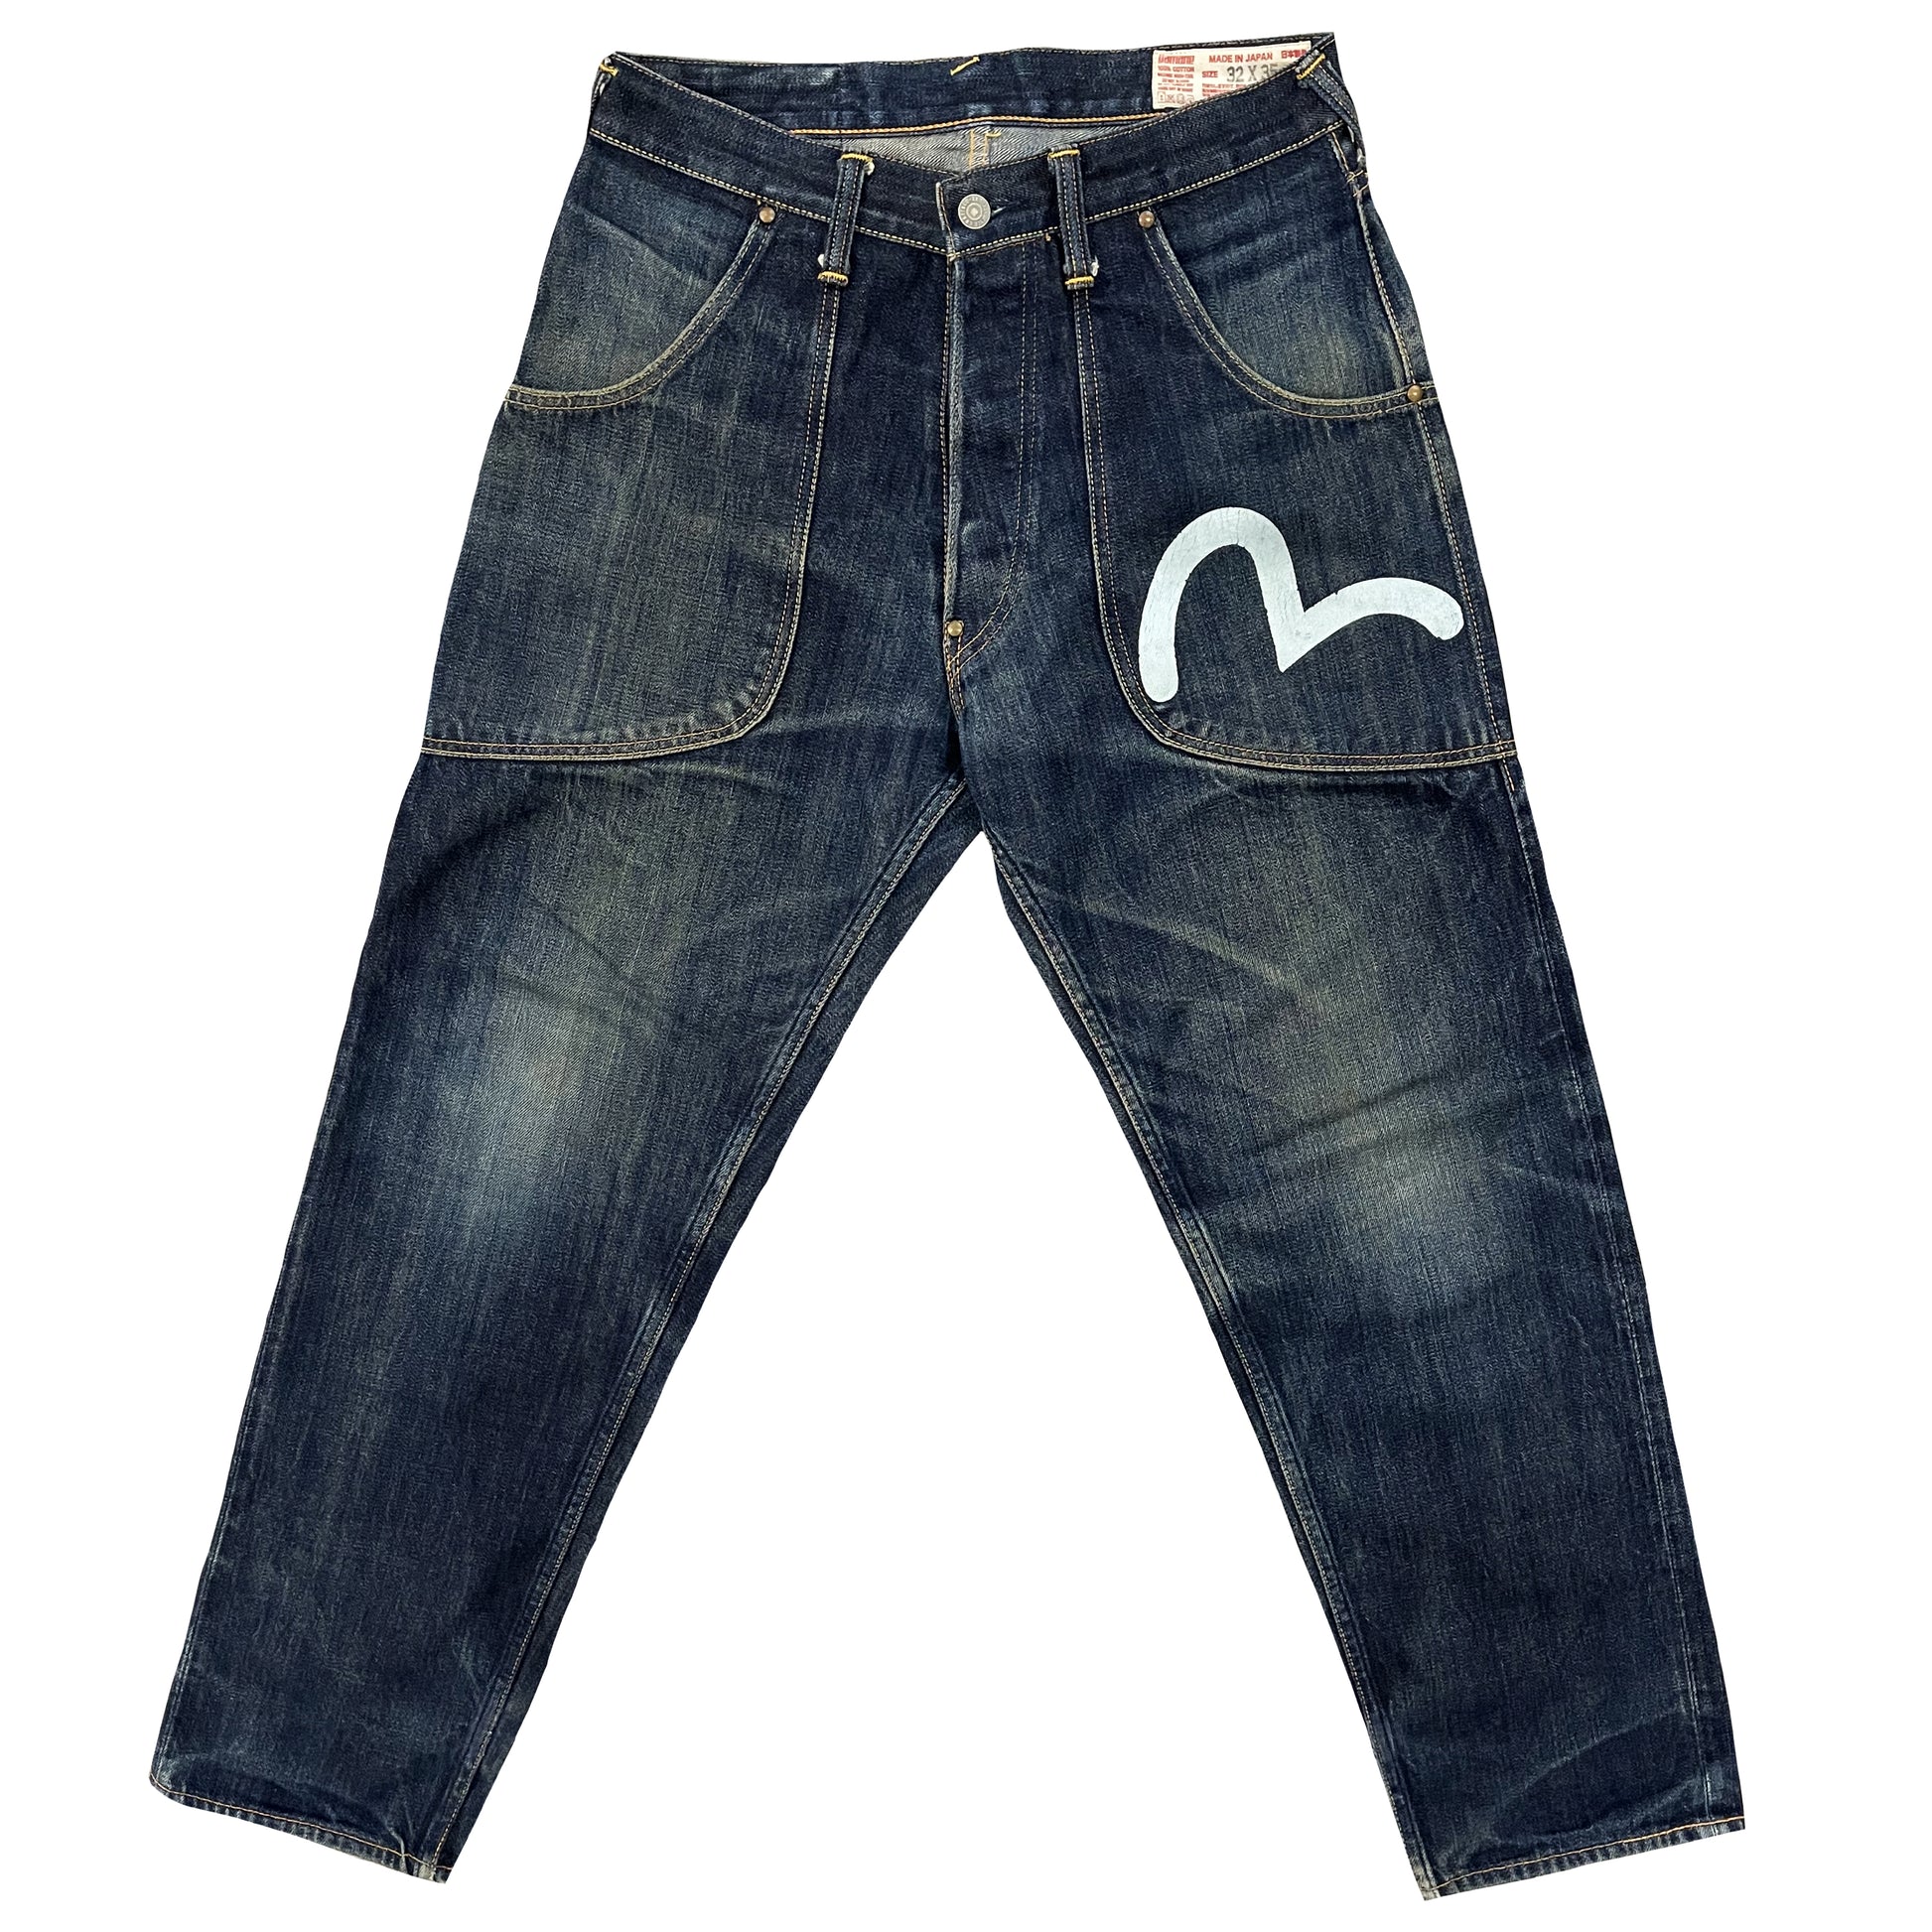 Evisu Carpenter Jeans